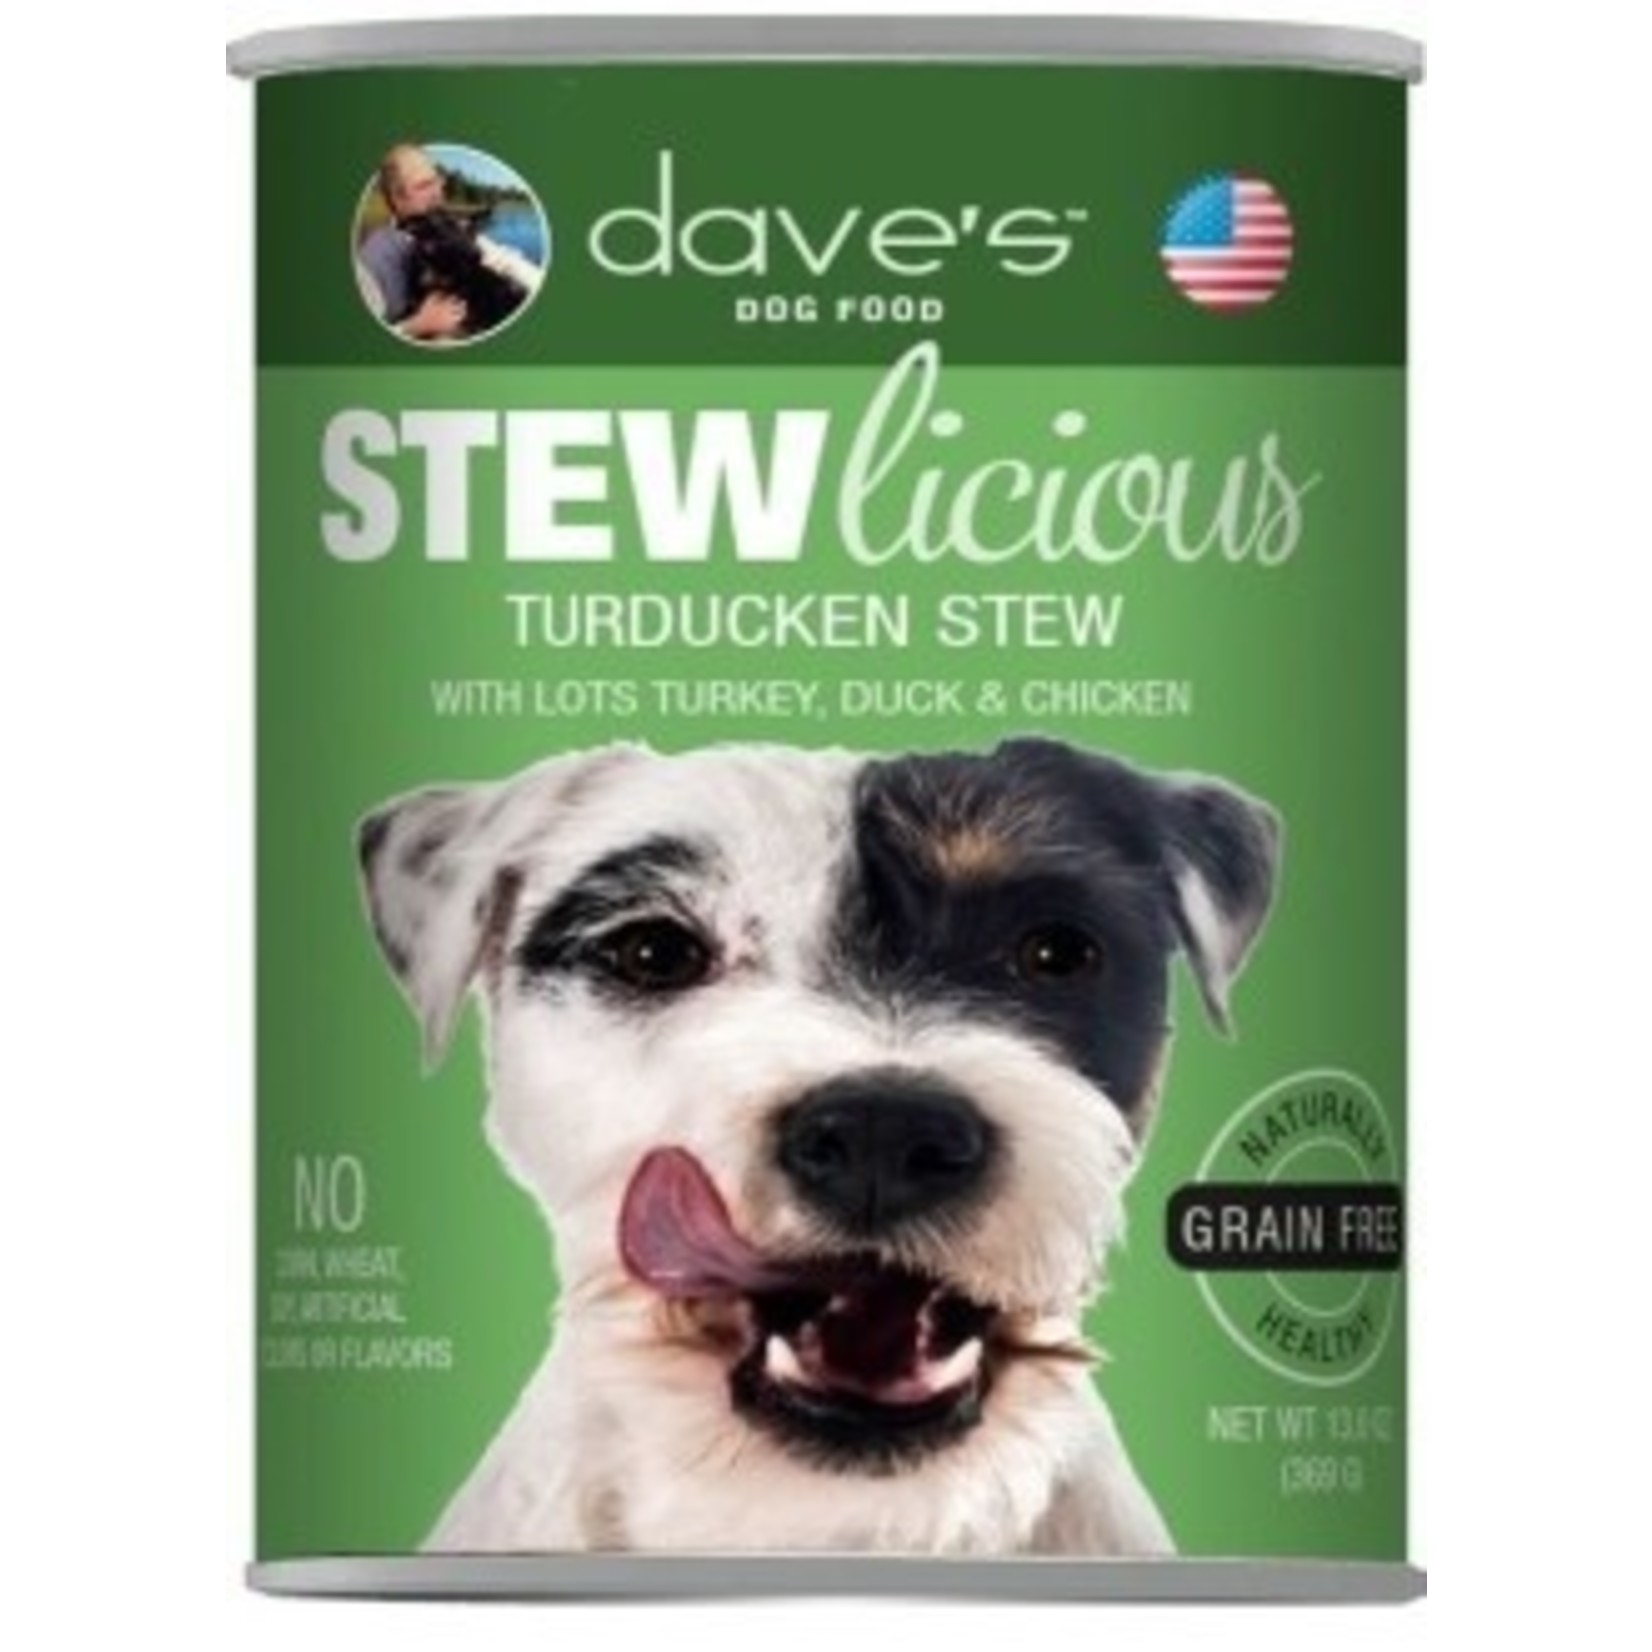 Dave's Pet Food Dave's Stewlicious Turducken Stew Canned Dog Food 13oz